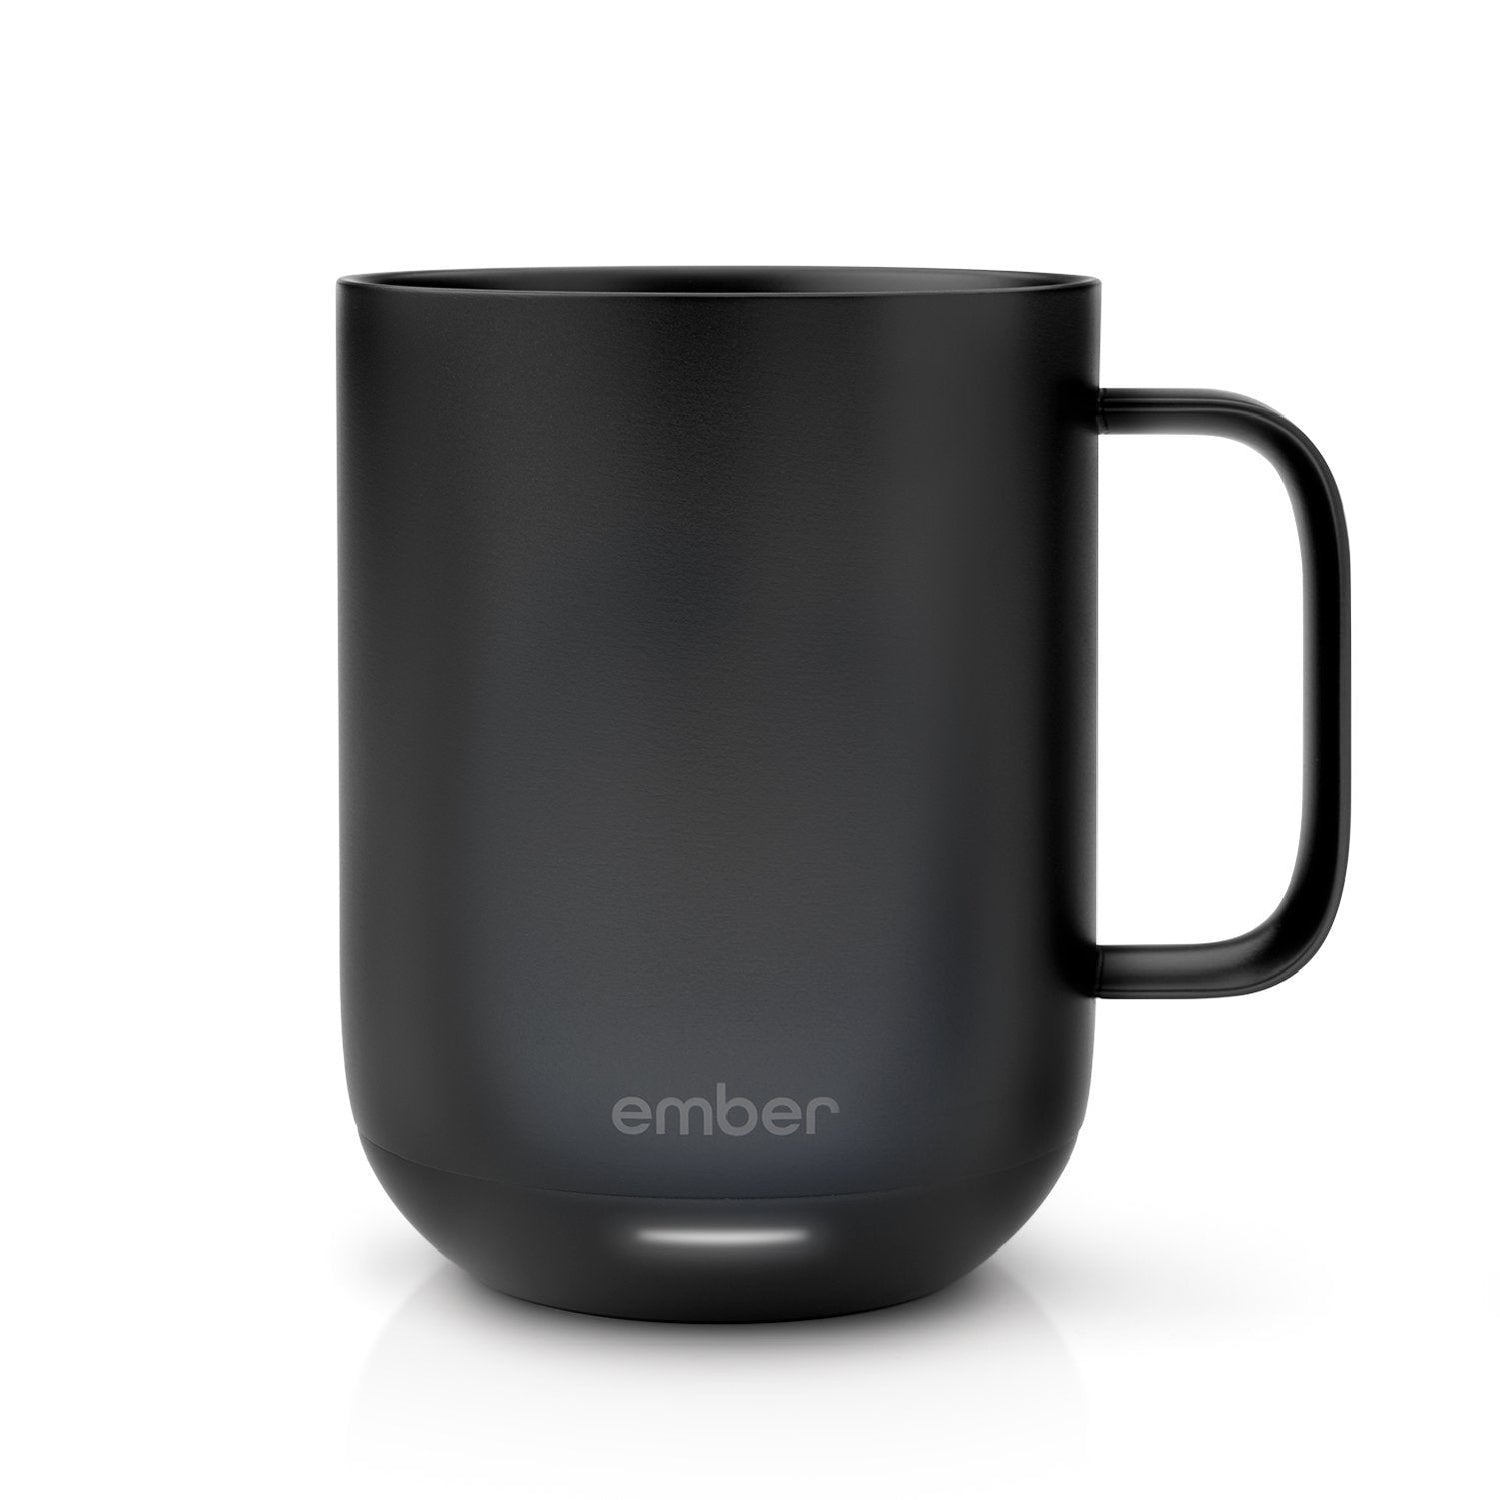 Custom Ember White Mug 14 oz., Ember Corporate Gifts